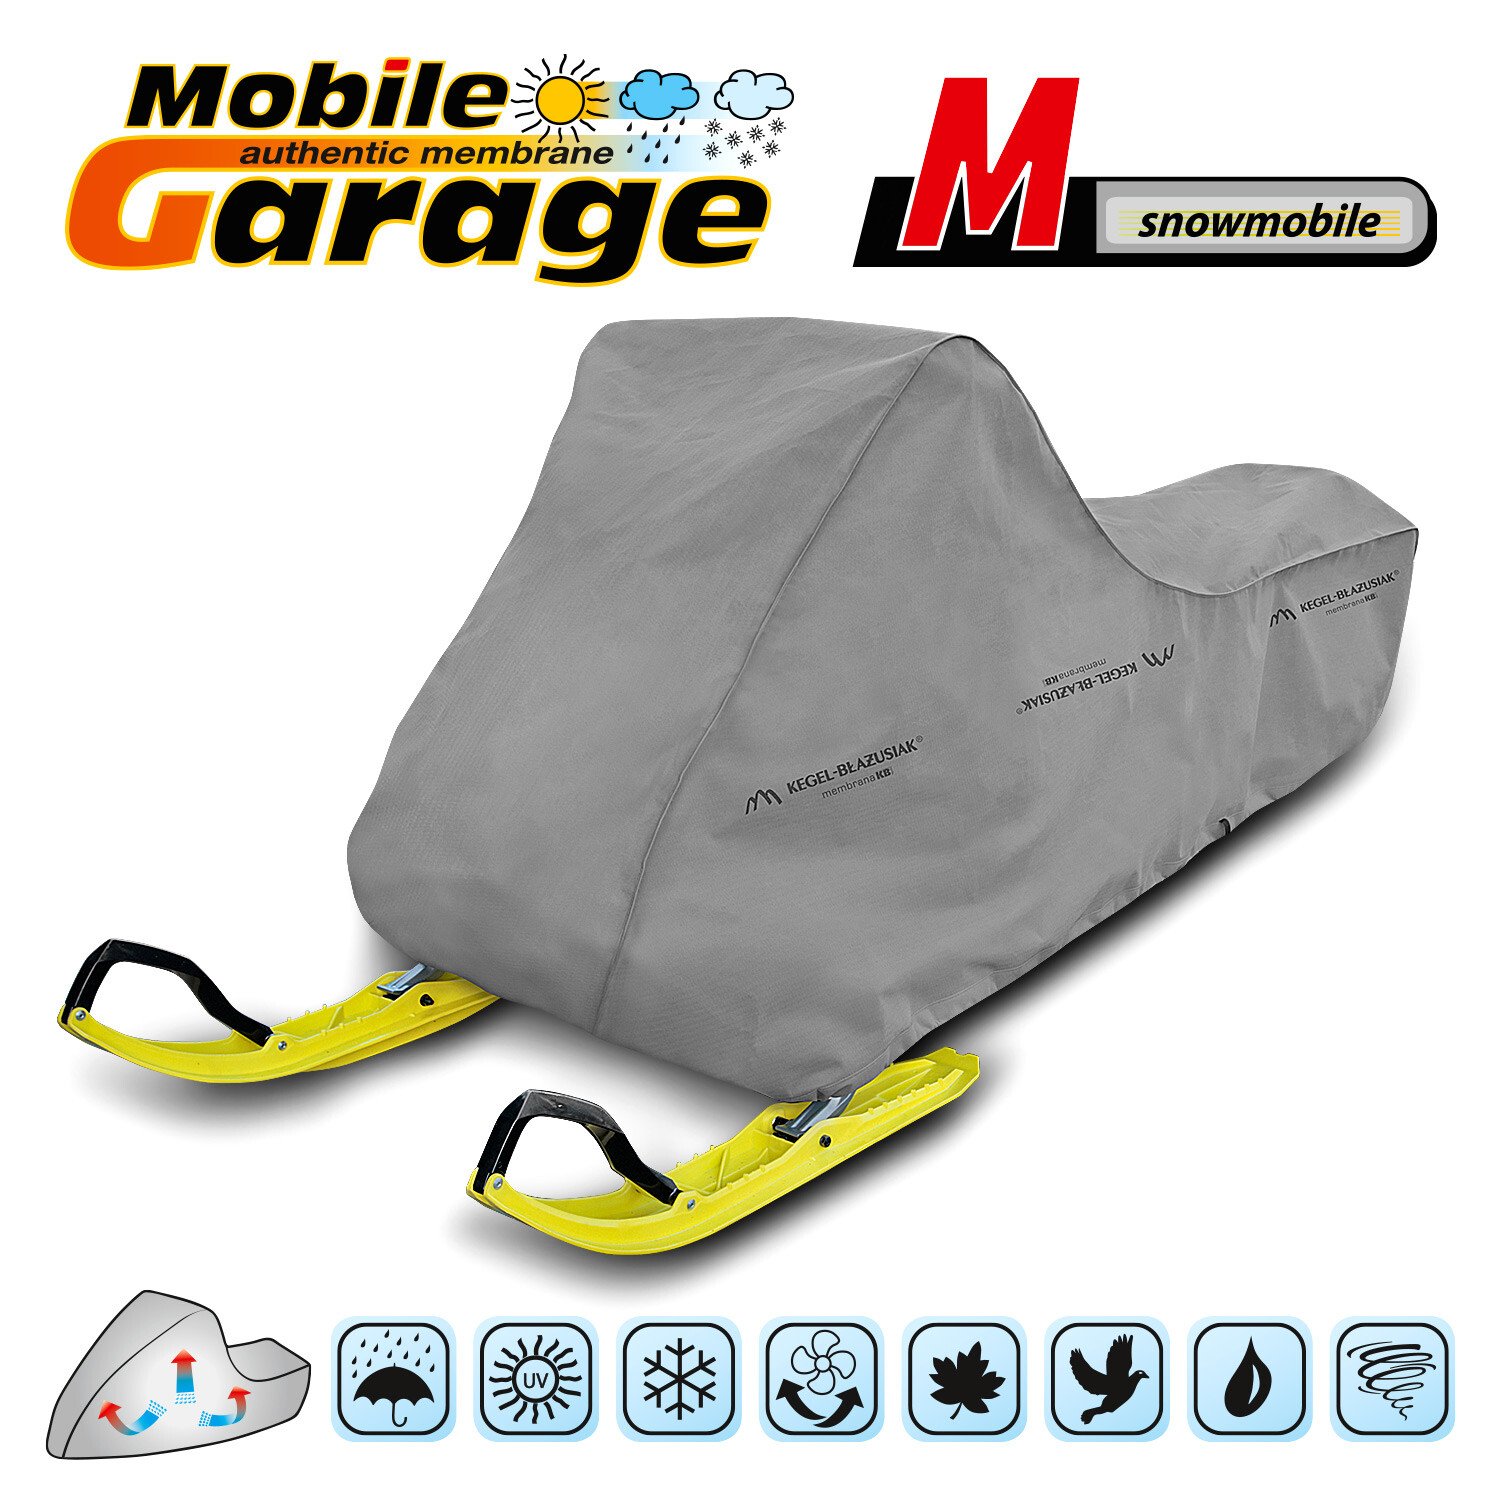 Mobile Garage snowmobile cover - M - 310x72x113cm thumb